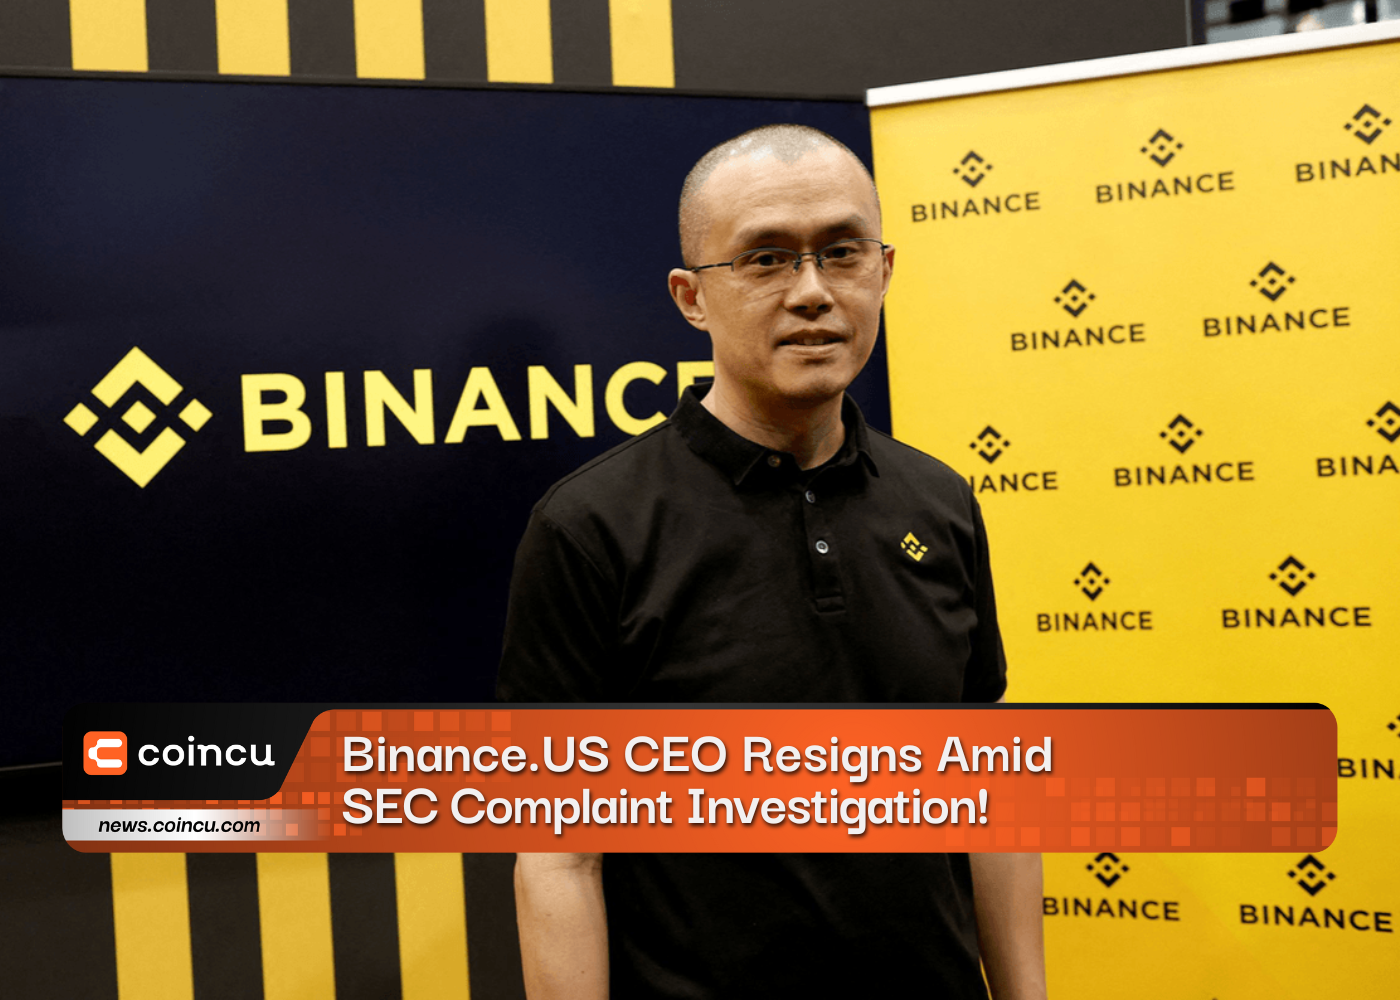 Binance.US CEO Resigns Amid